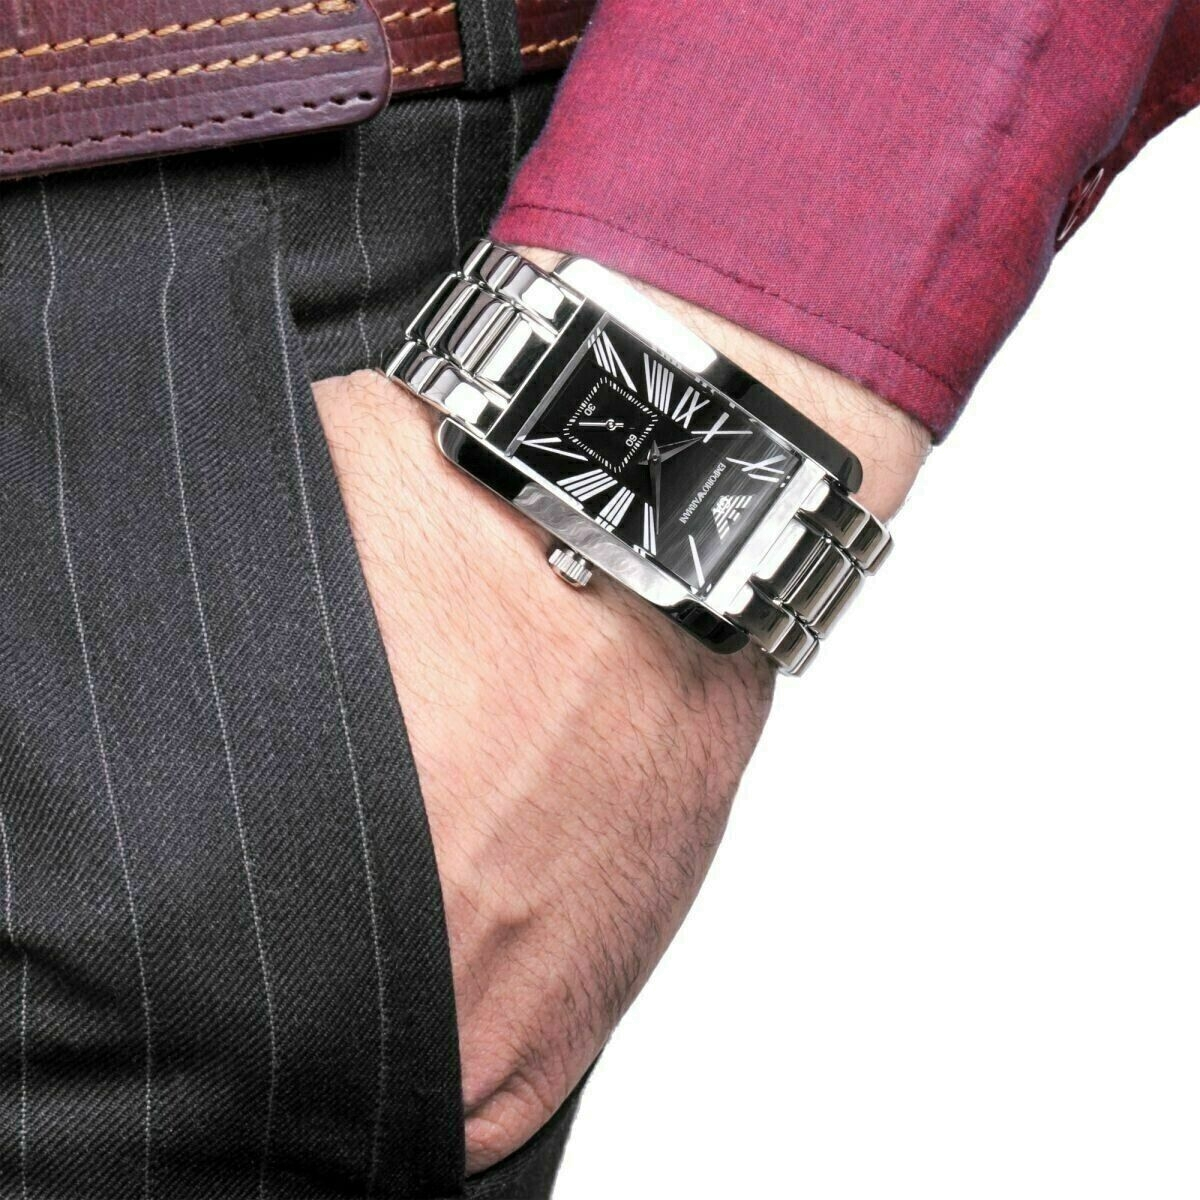 Emporio Armani Classic Black Dial Silver Steel Strap Watch For Men - AR0156